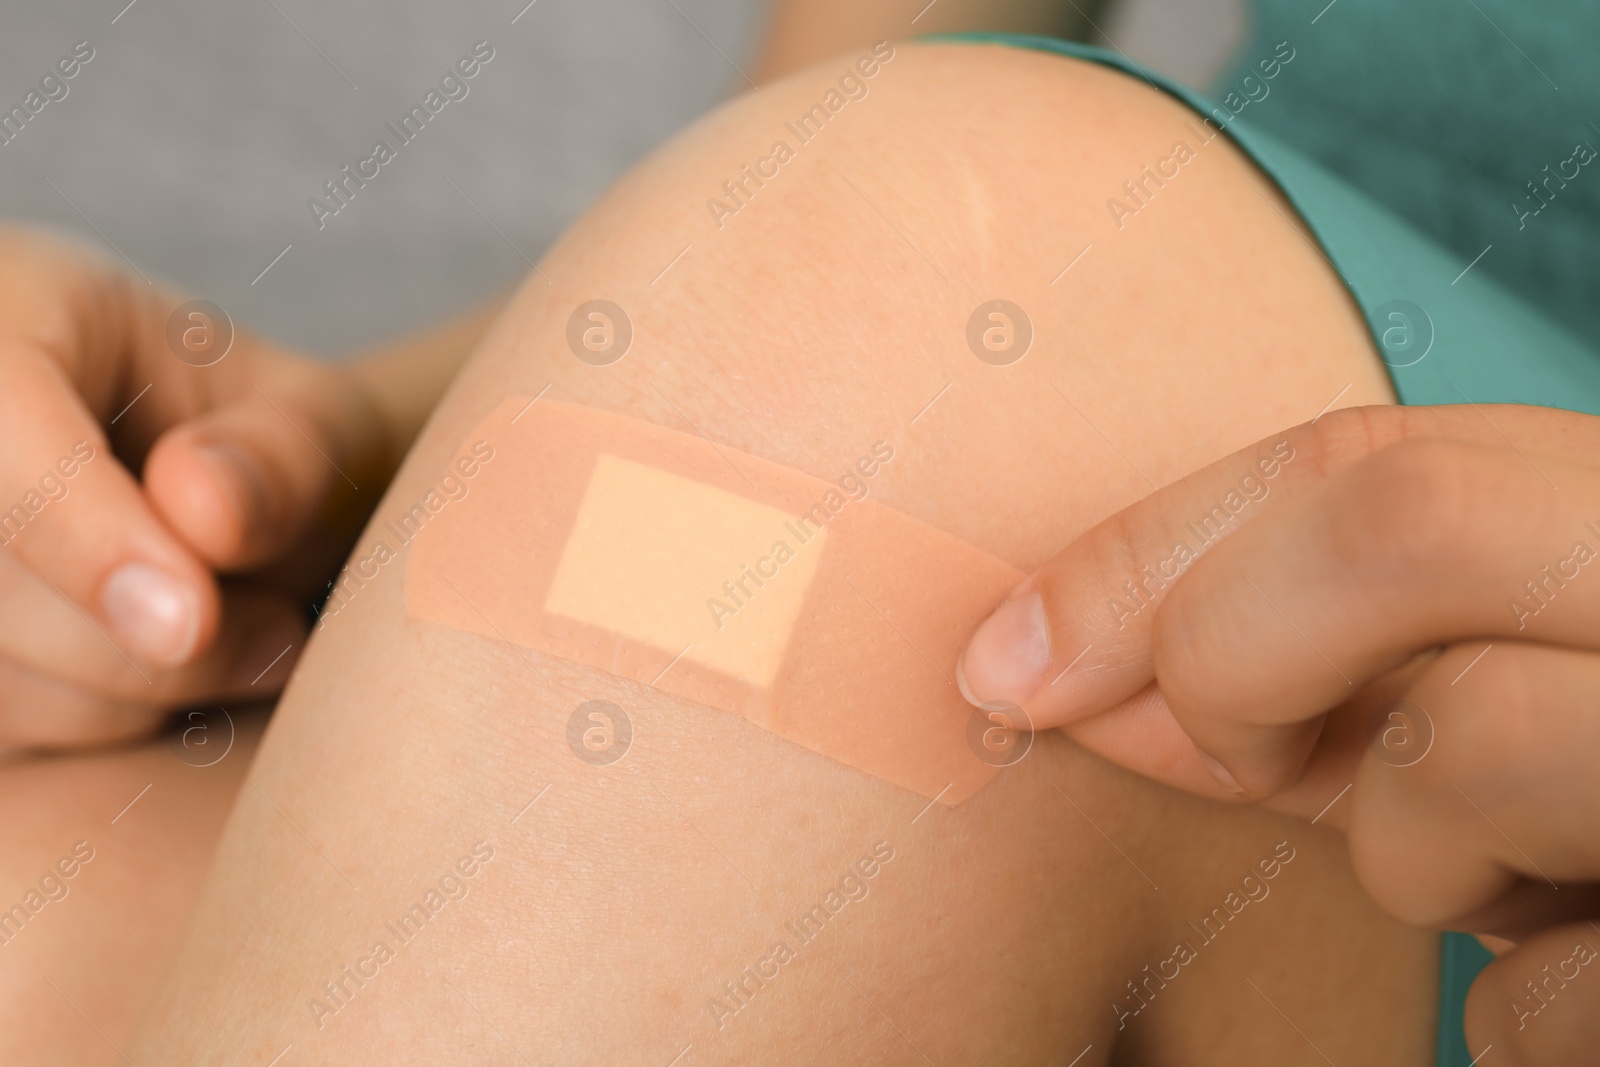 Photo of Woman applying plaster on knee, closeup view